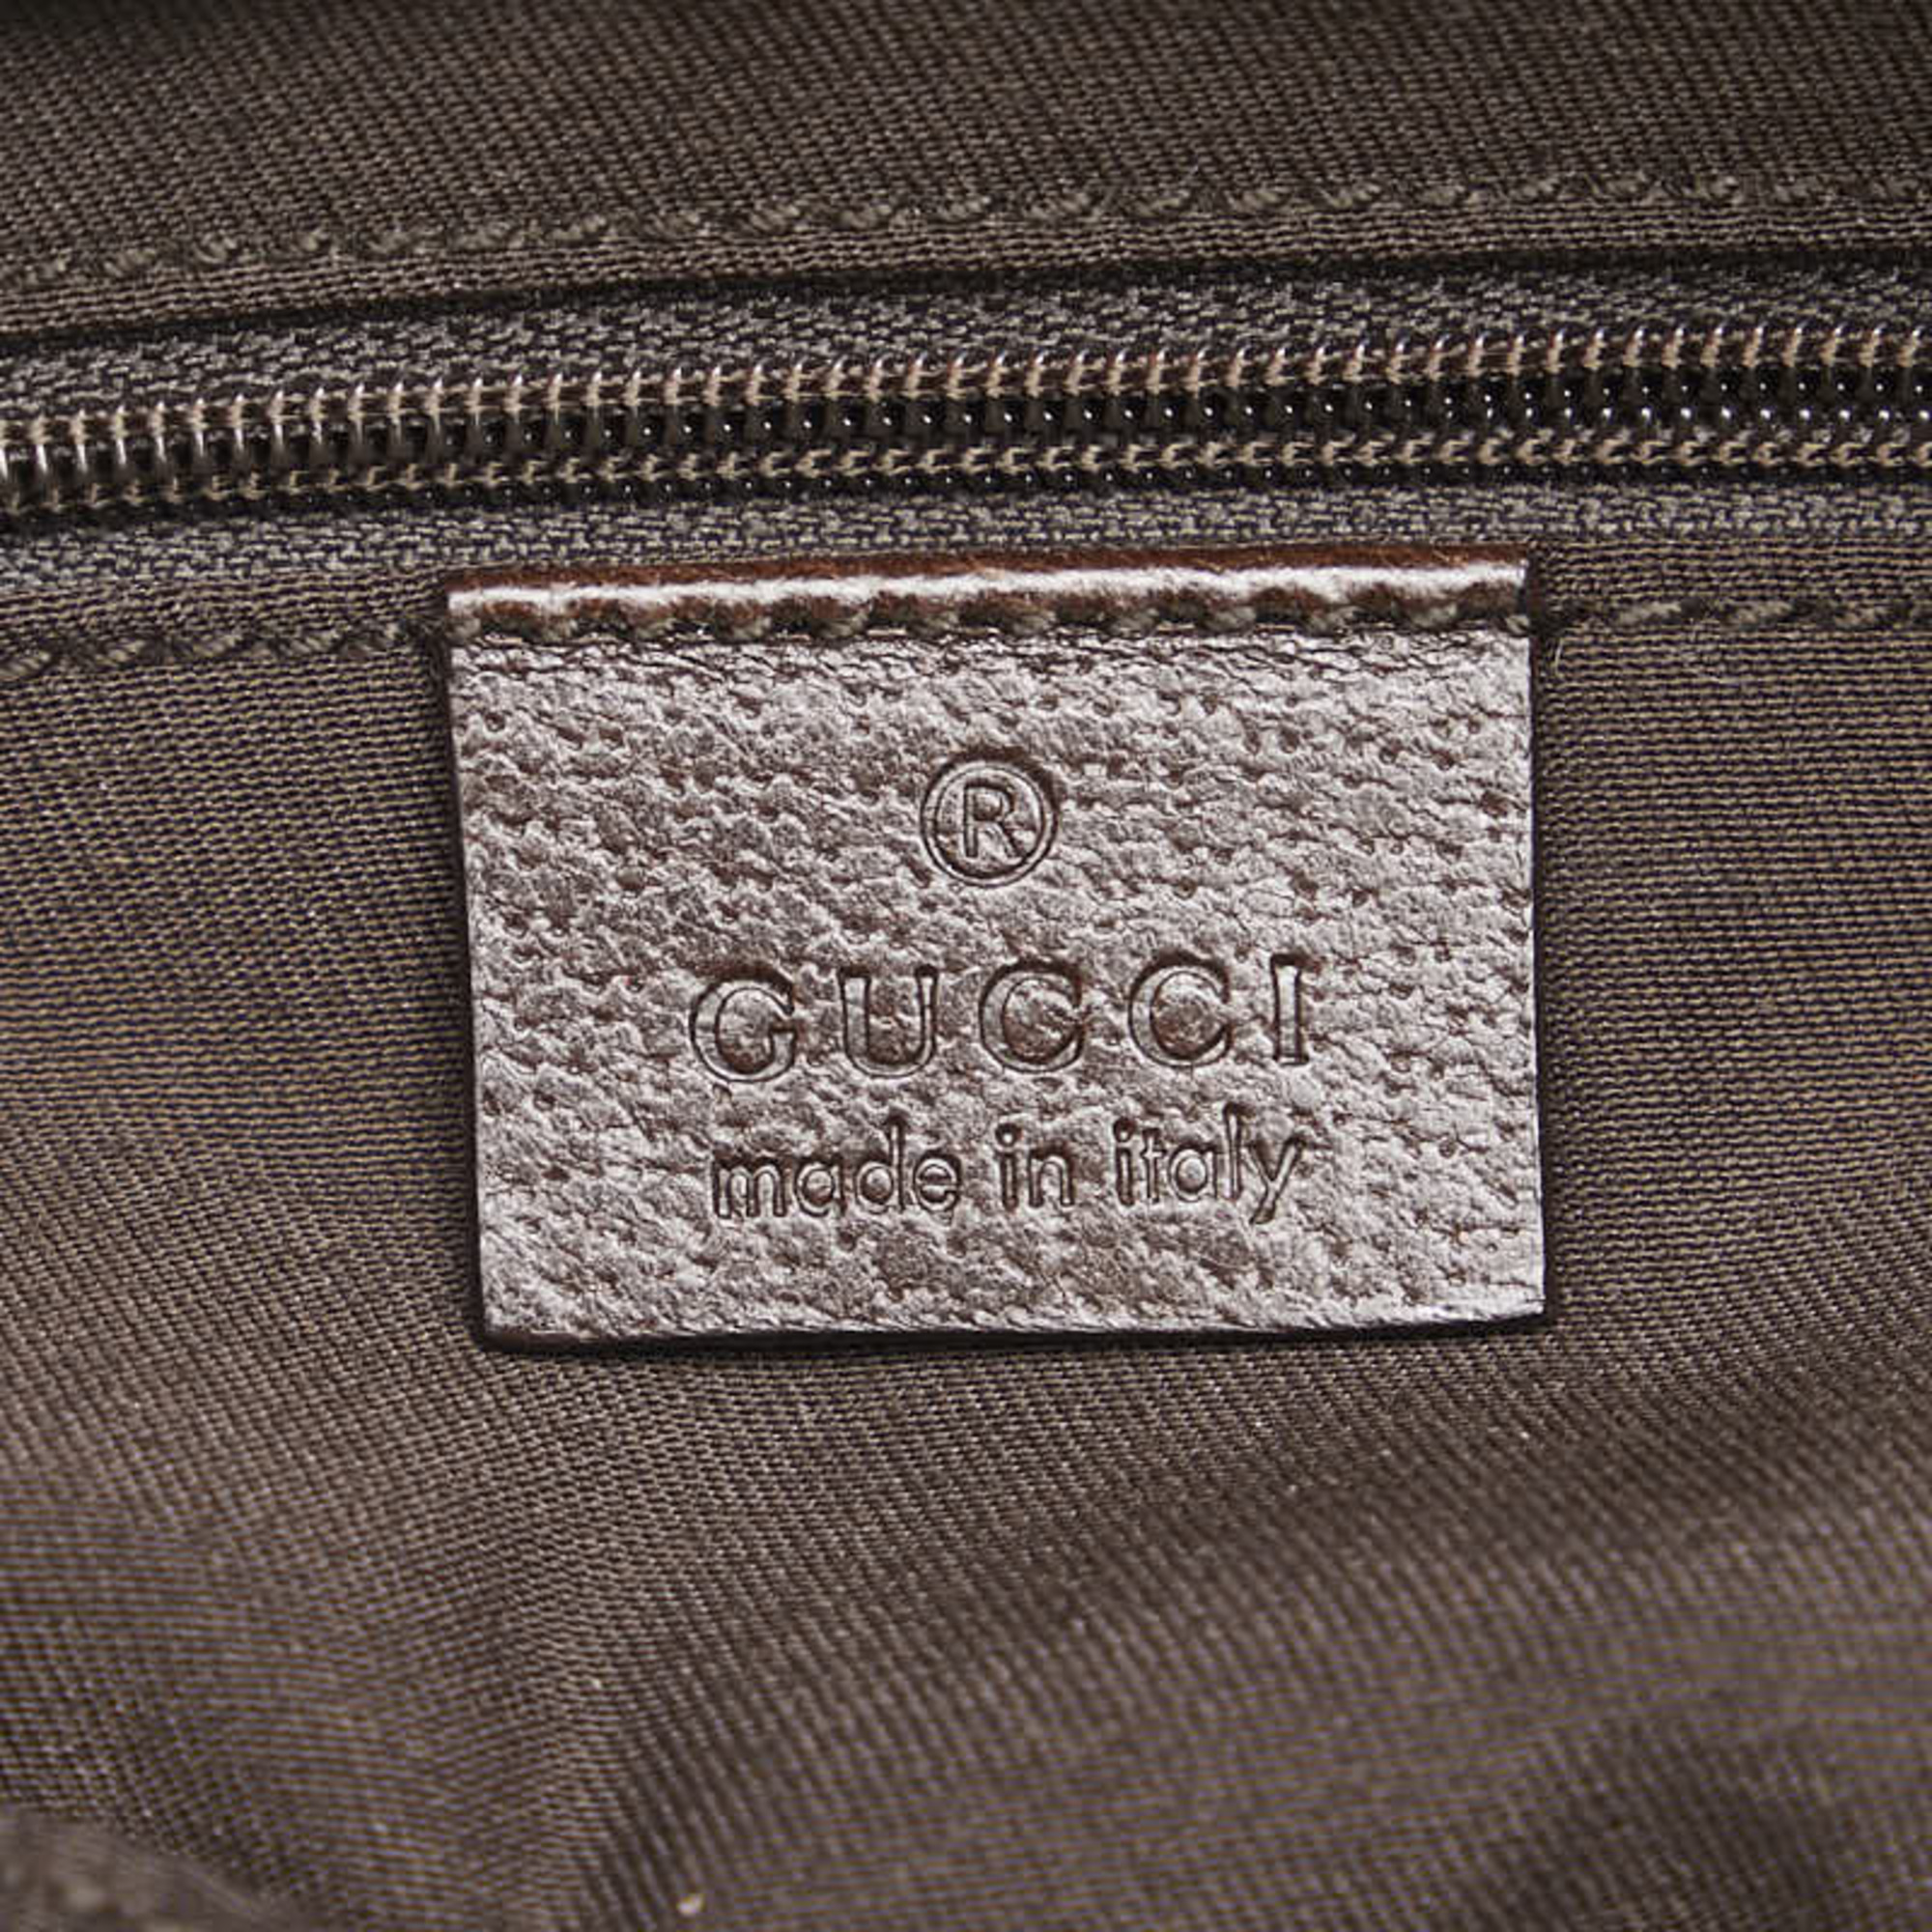 Gucci GG Canvas Tote Bag Handbag 139552 Brown Beige Leather Women's GUCCI